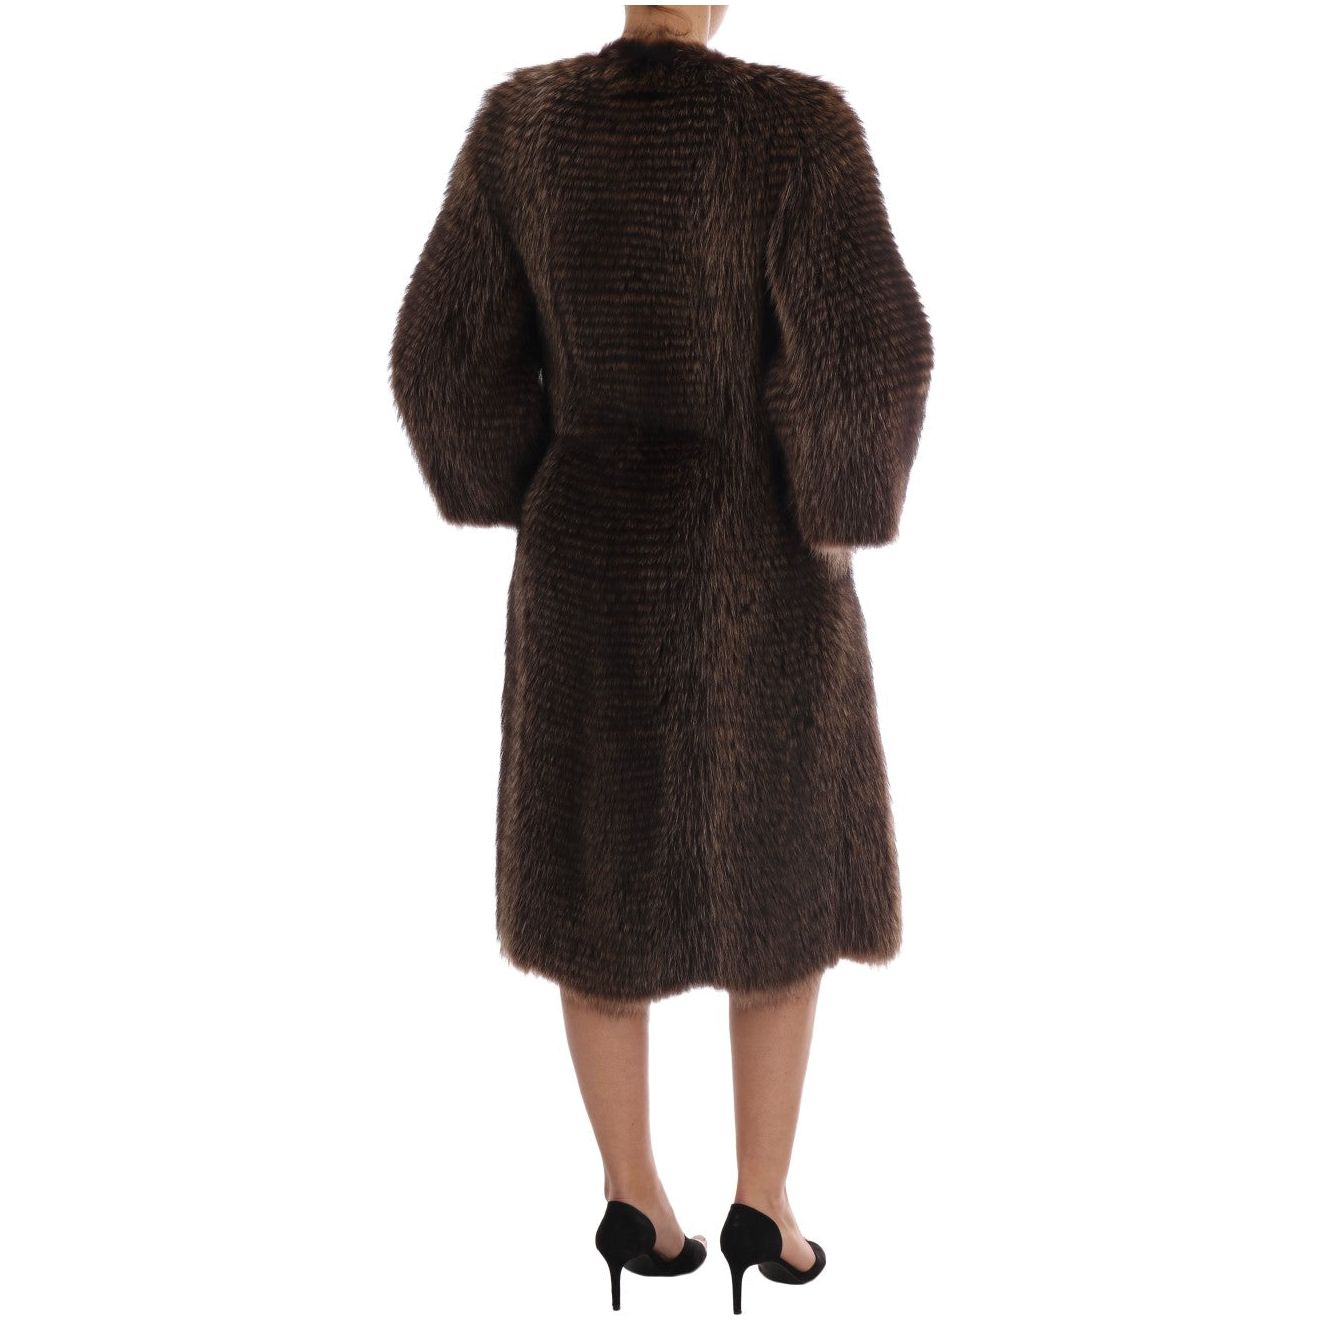 Dolce & Gabbana Elegant Brown Raccoon Fur Knee-Length Coat Coats & Jackets brown-raccoon-fur-coat-jacket 513000-brown-raccoon-fur-coat-jacket-2.jpg